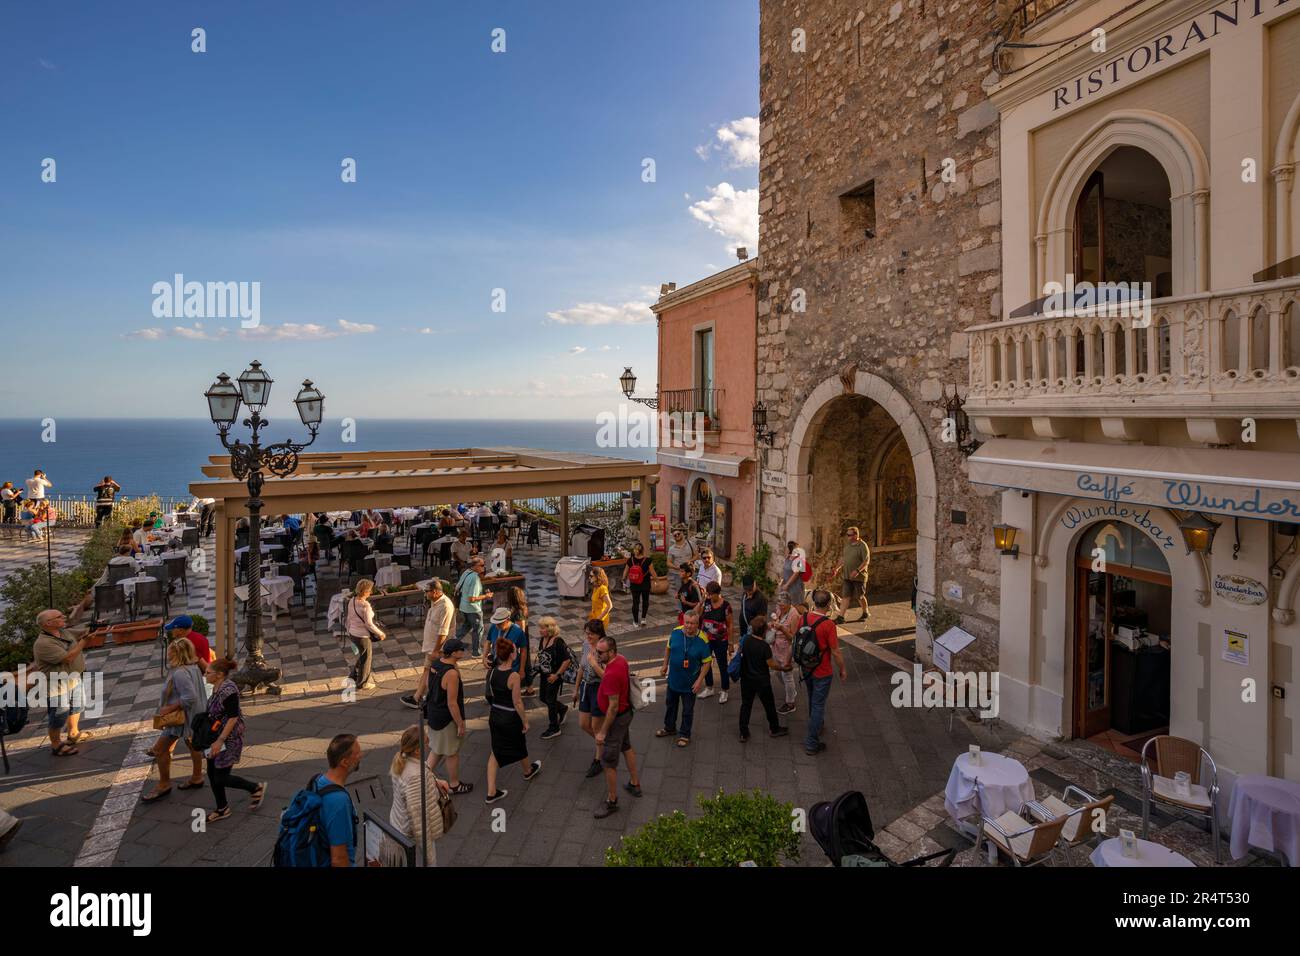 View of Torre dell'orologio e Porta di mezzo and busy street in Taormina, Taormina, Sicily, Italy, Europe Stock Photo